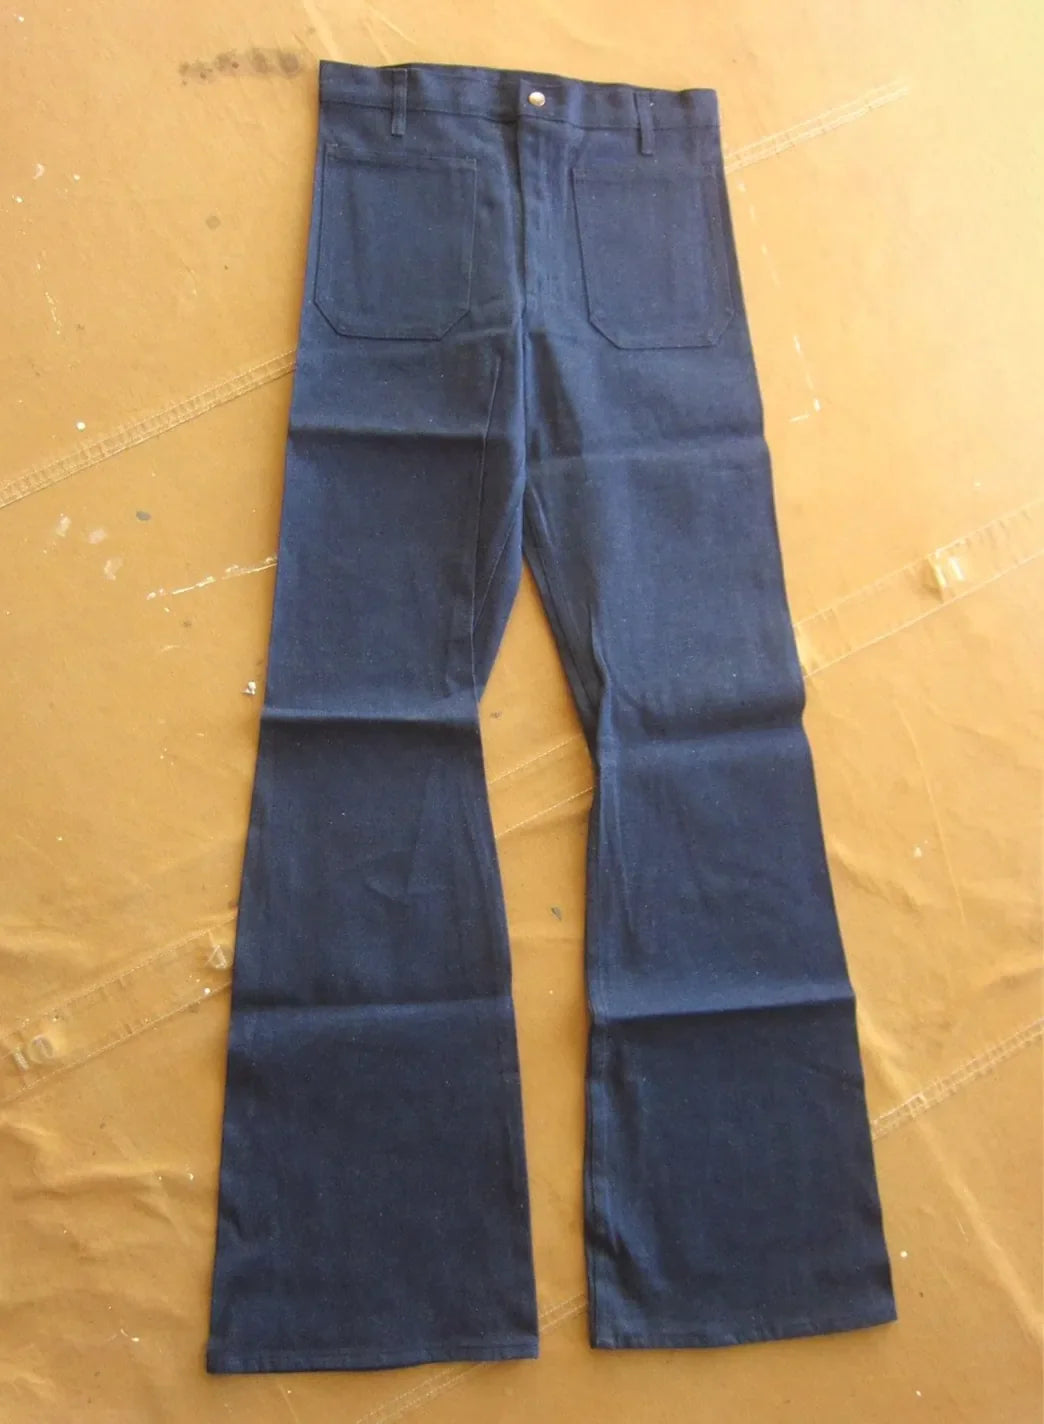 1970s Denim Bell Bottom Jeans 
100% Cotton
Deadstock 
Small Medium Low Rise 27 28